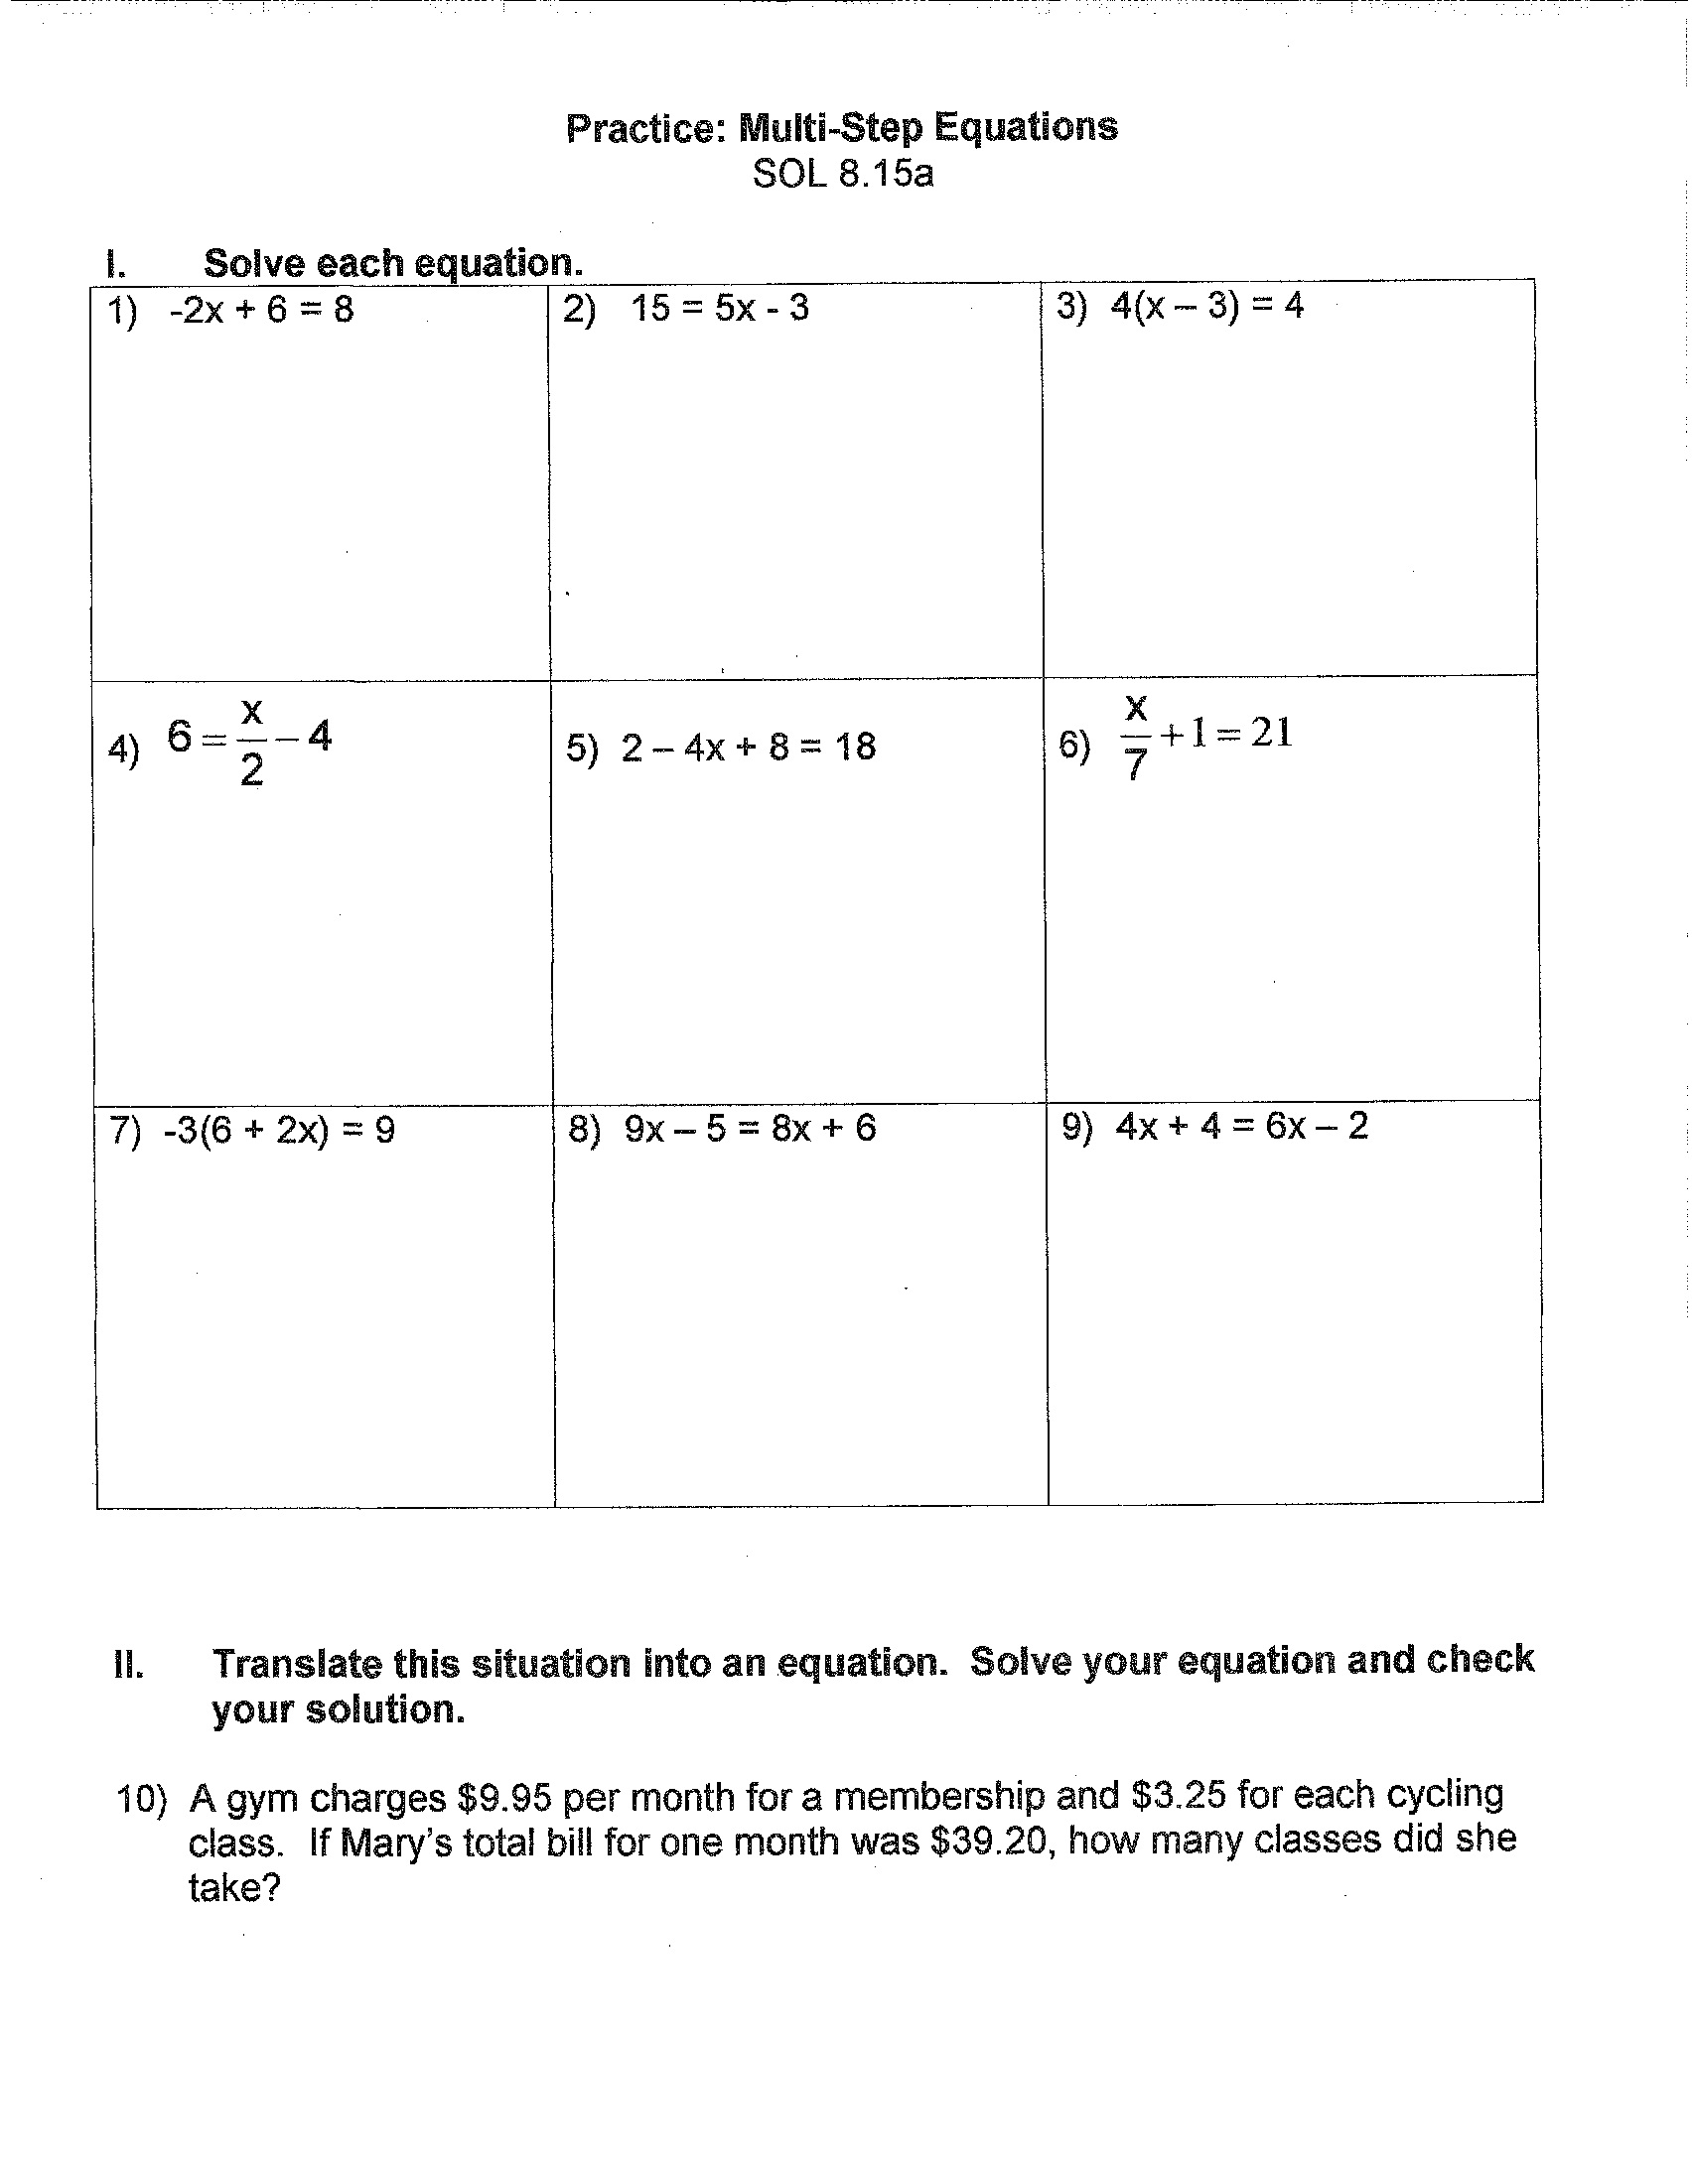 Worksheet On Solving Multi Step Equations